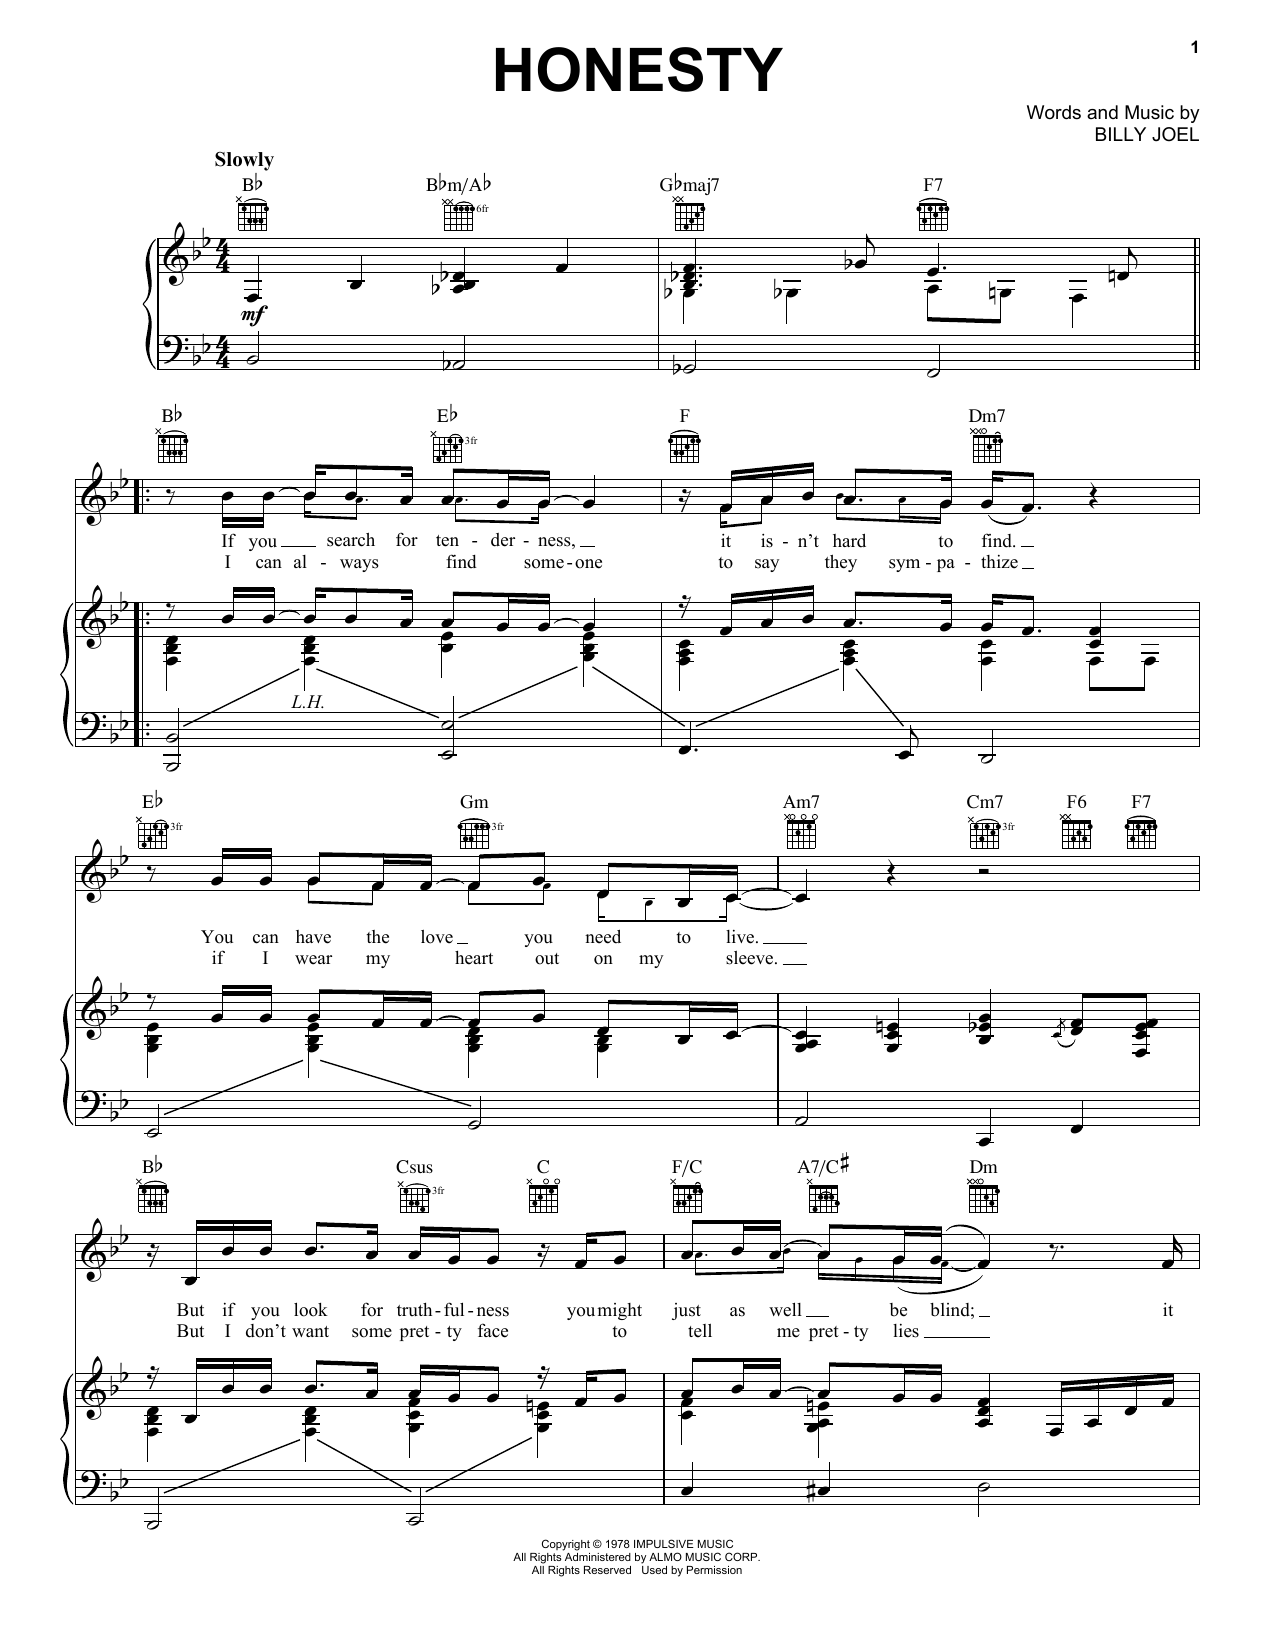 Billy Joel Honesty Sheet Music Notes & Chords for Lyrics & Piano Chords - Download or Print PDF